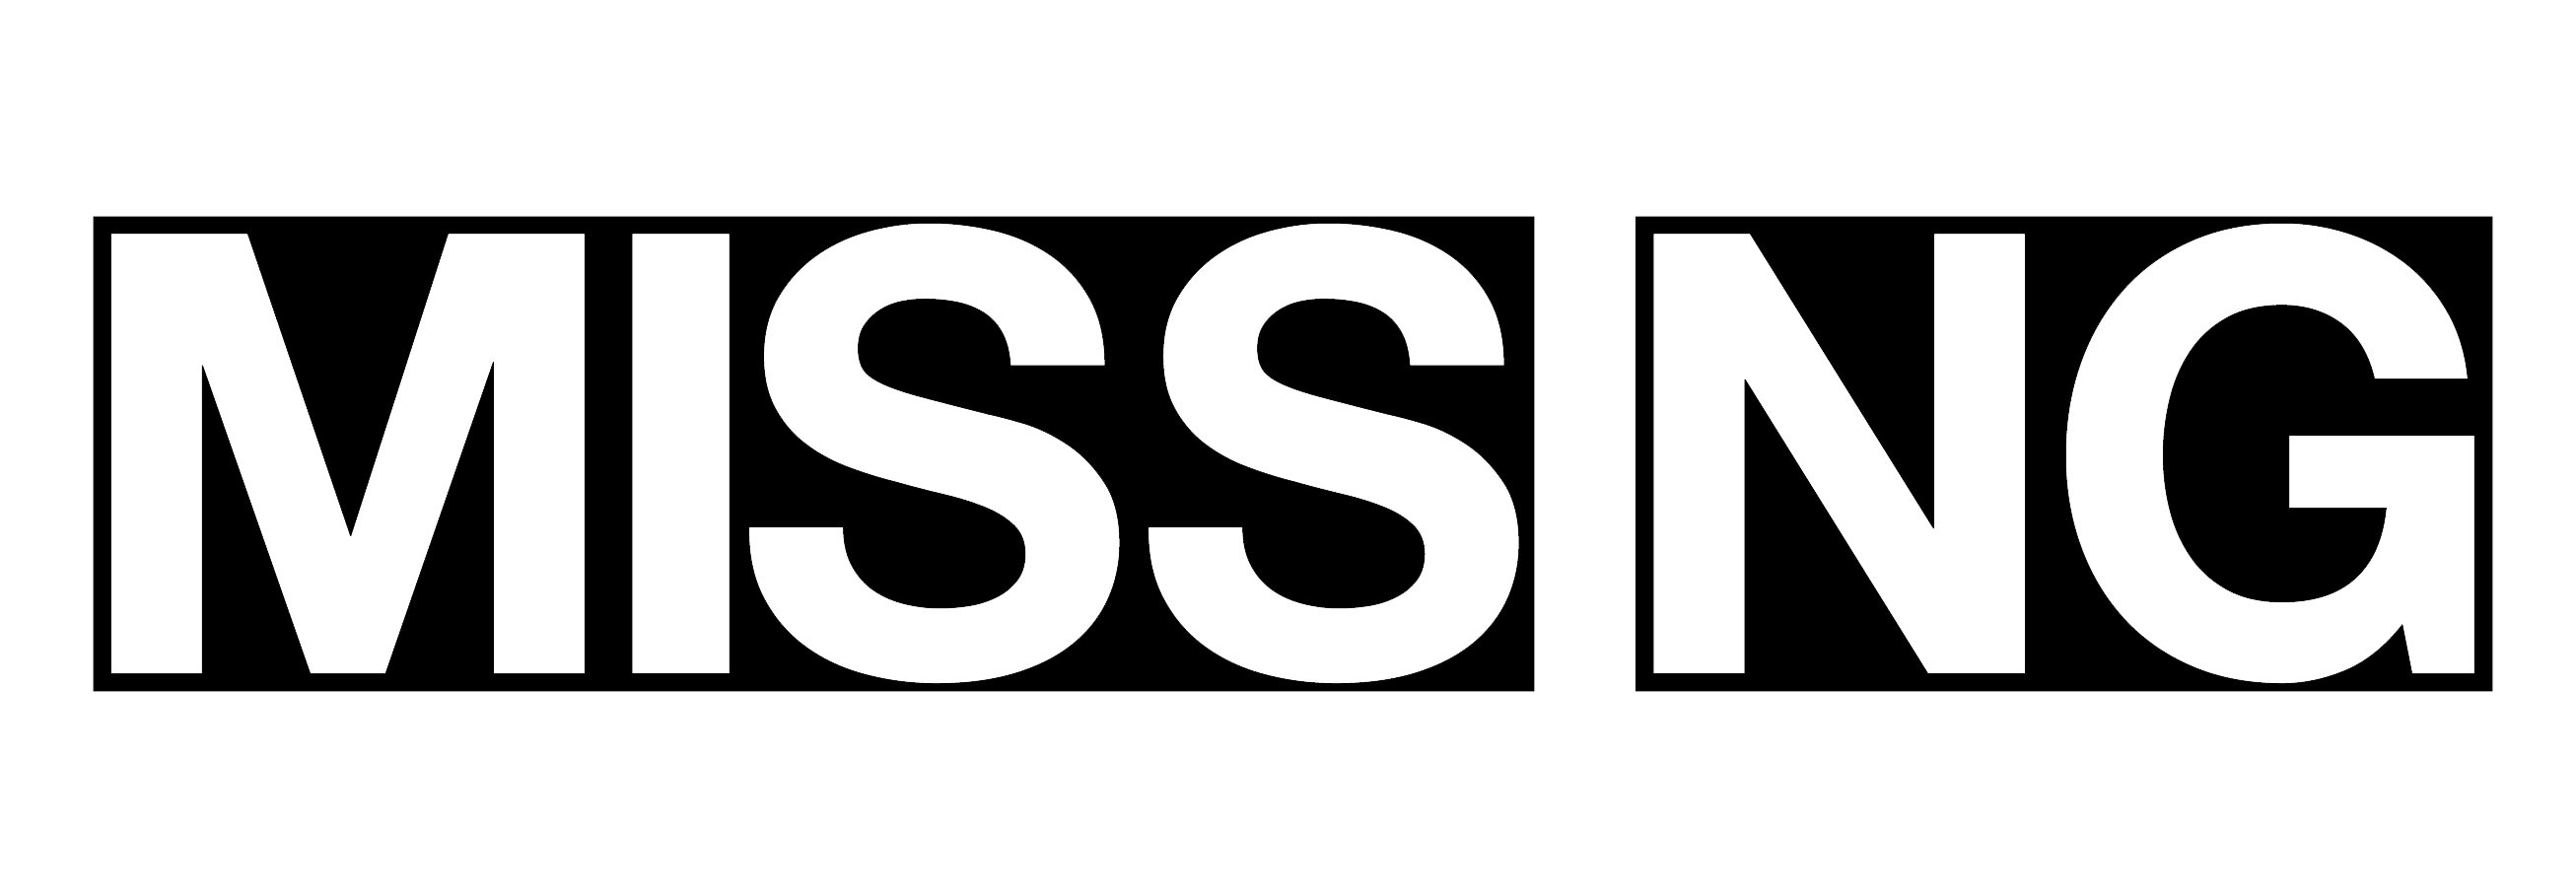 Missing Link Trust logo